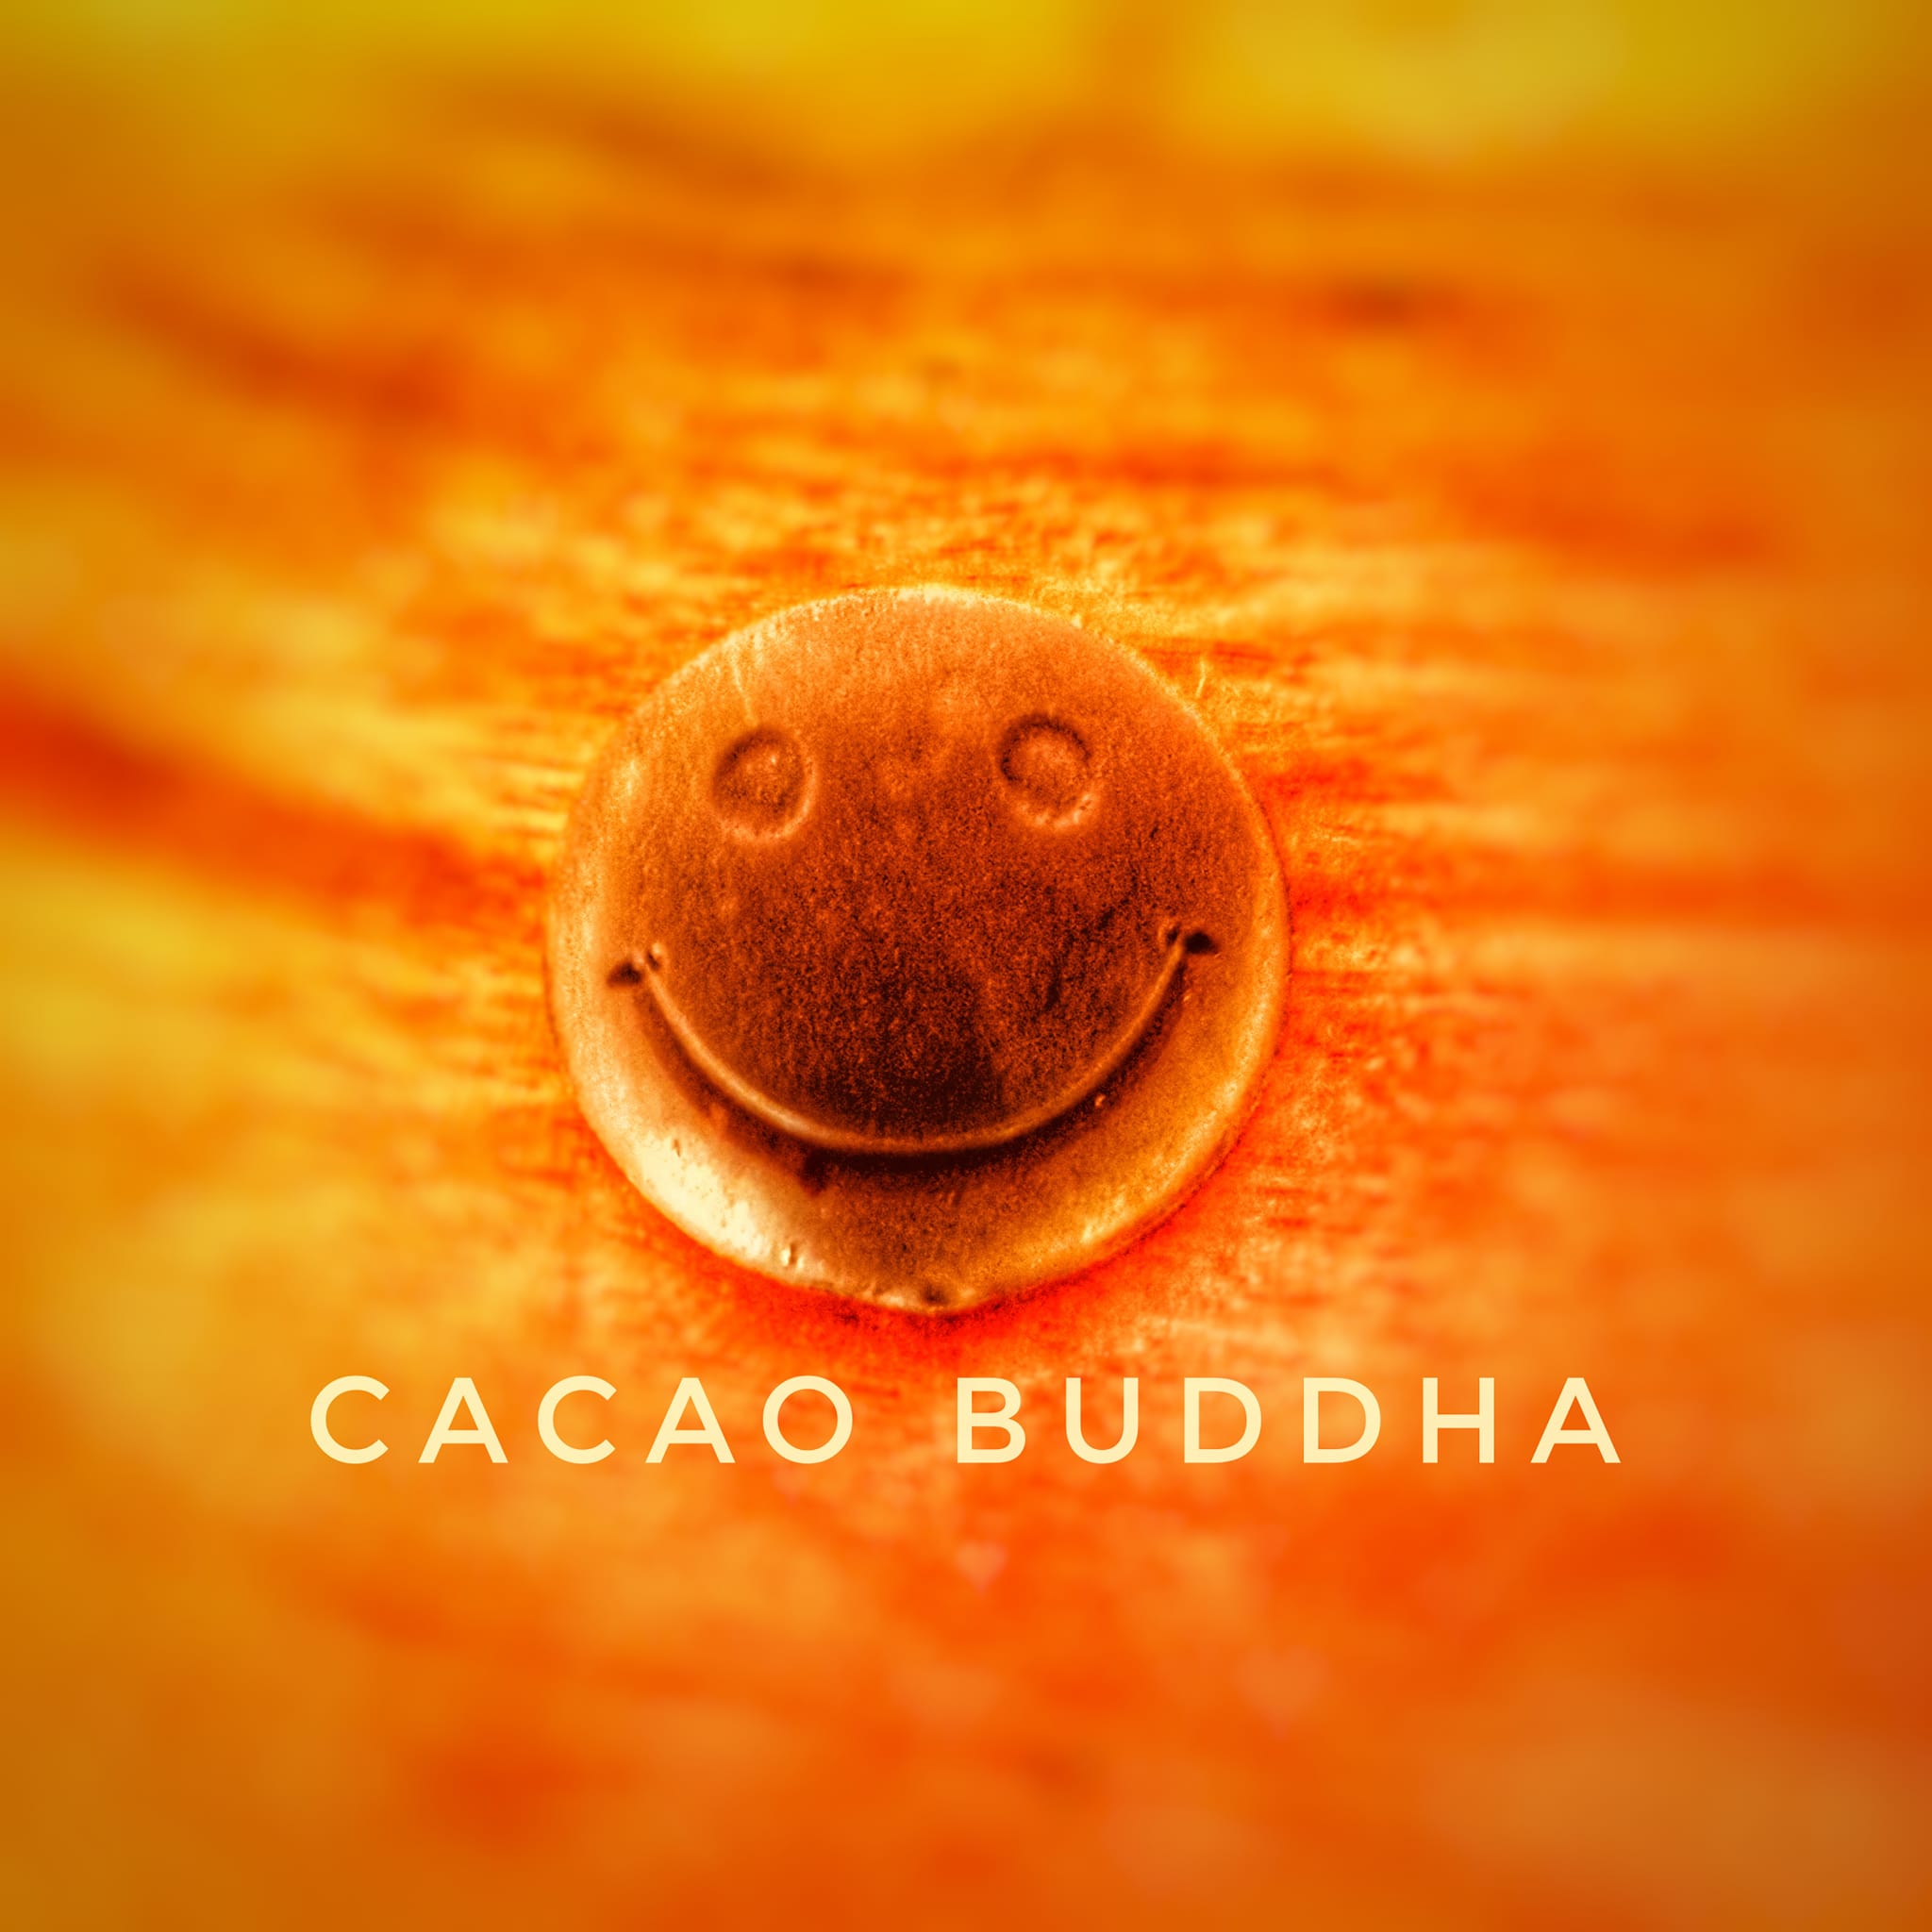 cacao Buddha cerimonia e iniziazioni